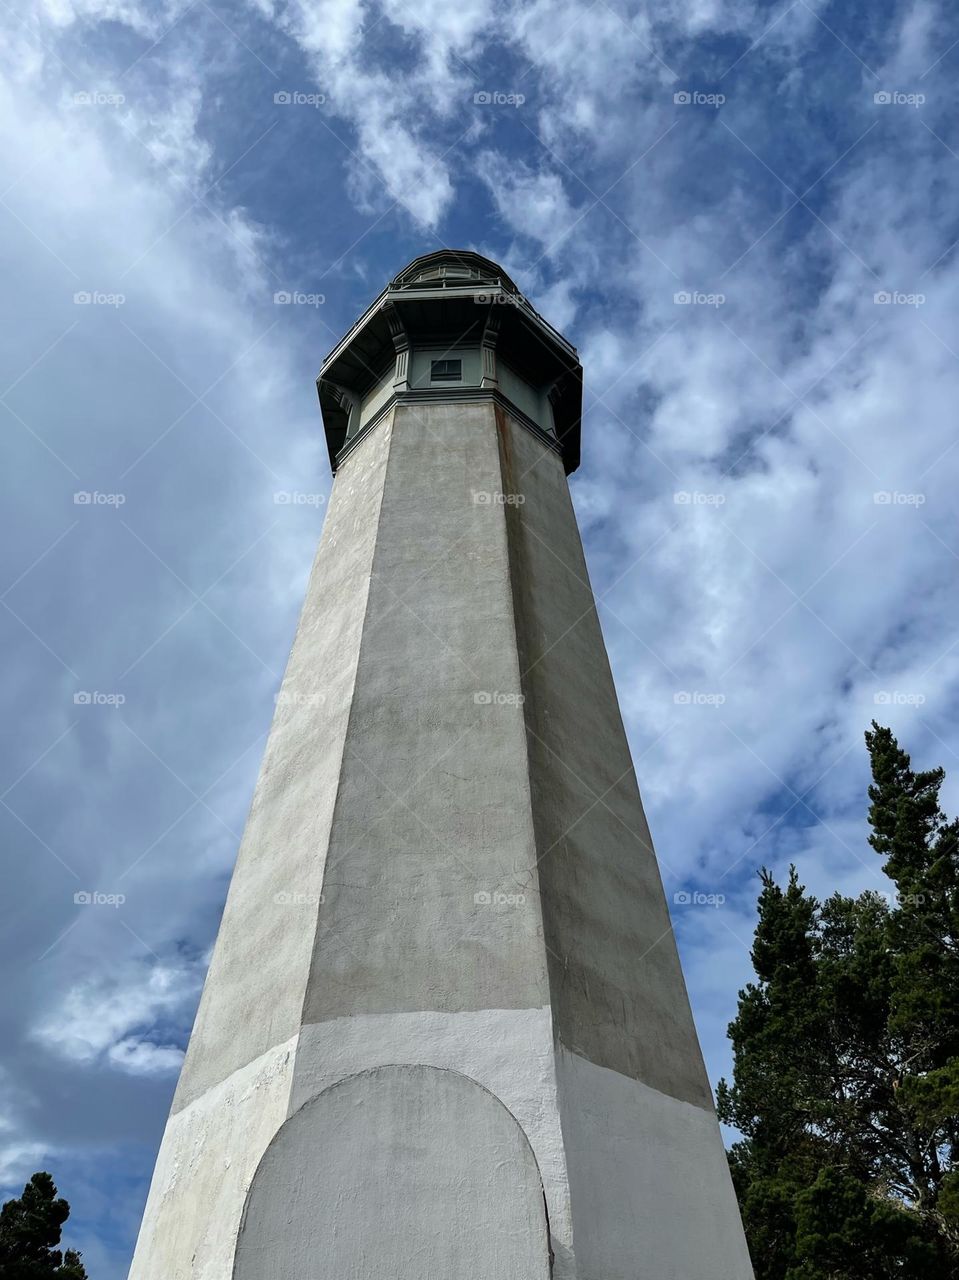 Tallest Lighthouse in Washington, Grays Harbor Lighthouse 